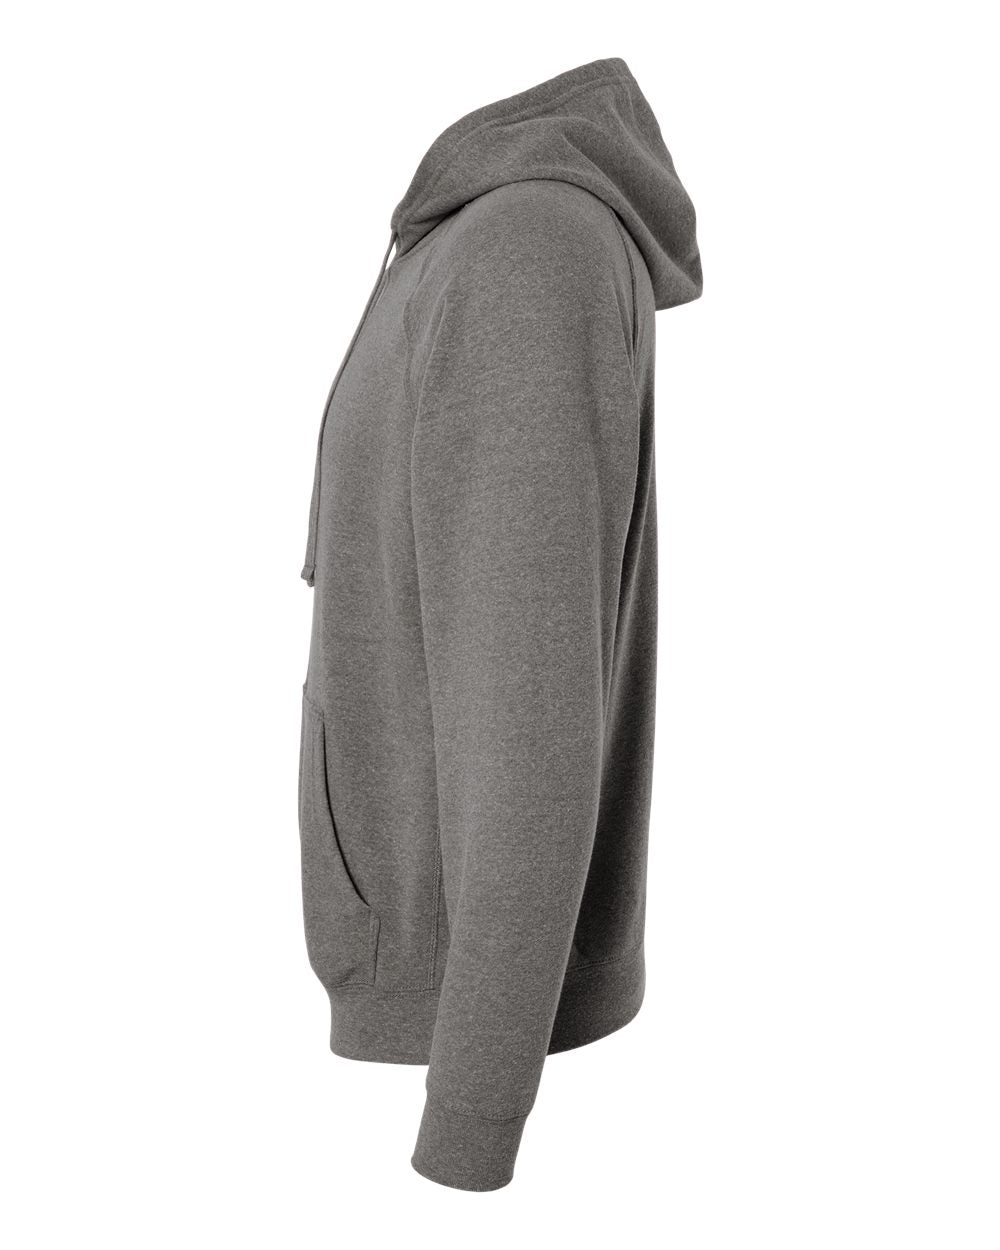 Independent Trading Co. Unisex Special Blend Raglan Hooded Sweatshirt PRM33SBP #color_Nickel